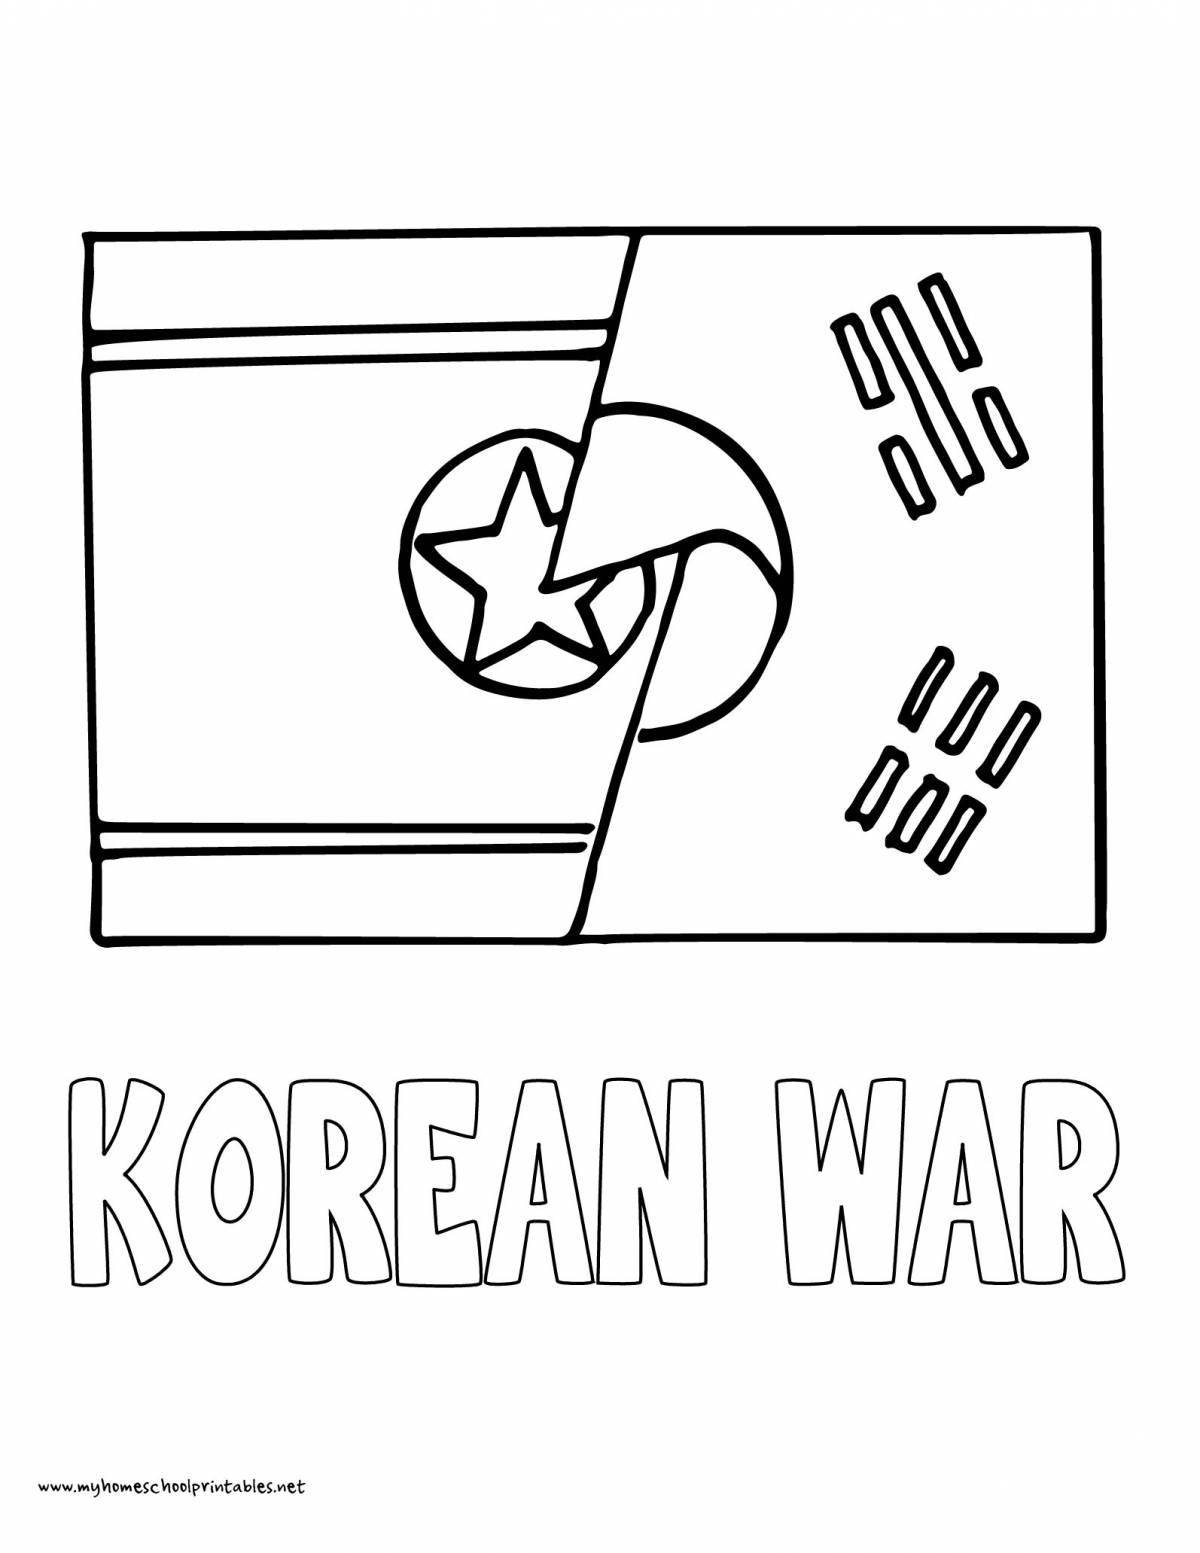 Coloring page gorgeous korea flag